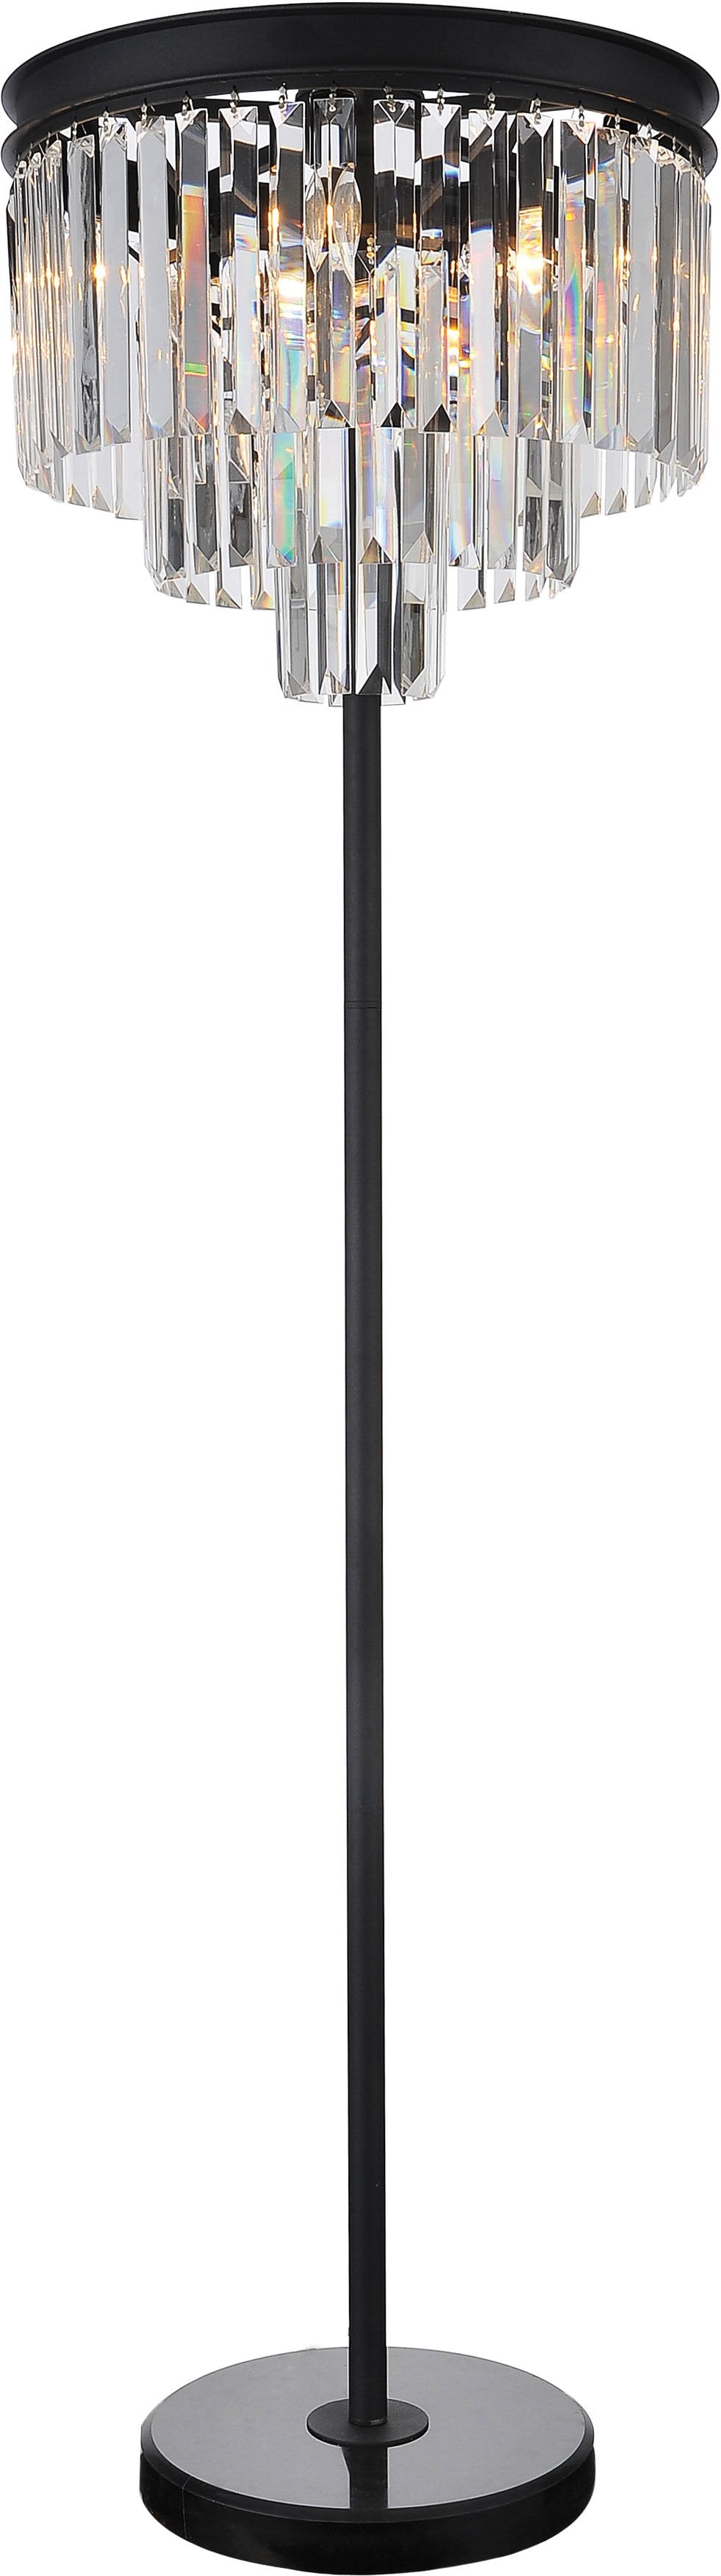 Piper Floor Lamp, Black Satin - MyTinyHaus, [product_description]